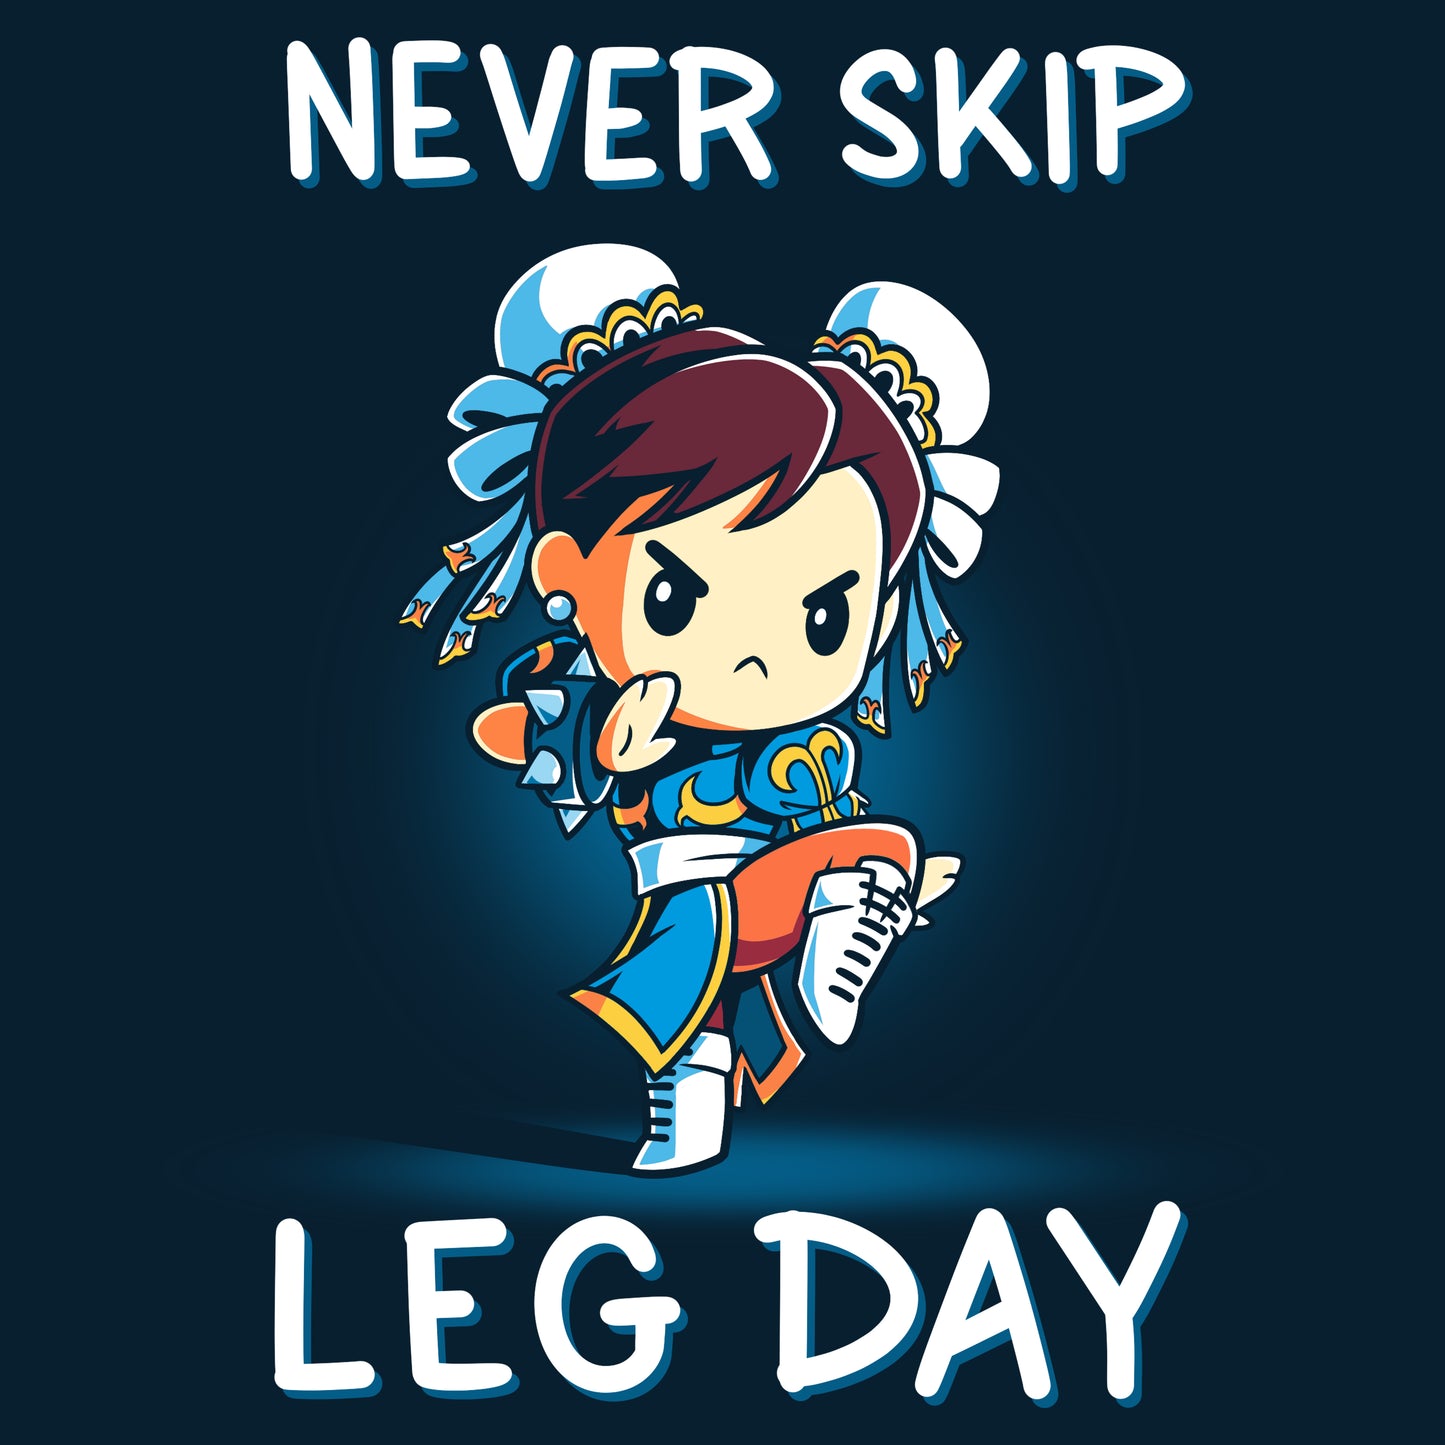 Officially licensed Never Skip Leg Day (Chun-Li) by Capcom.